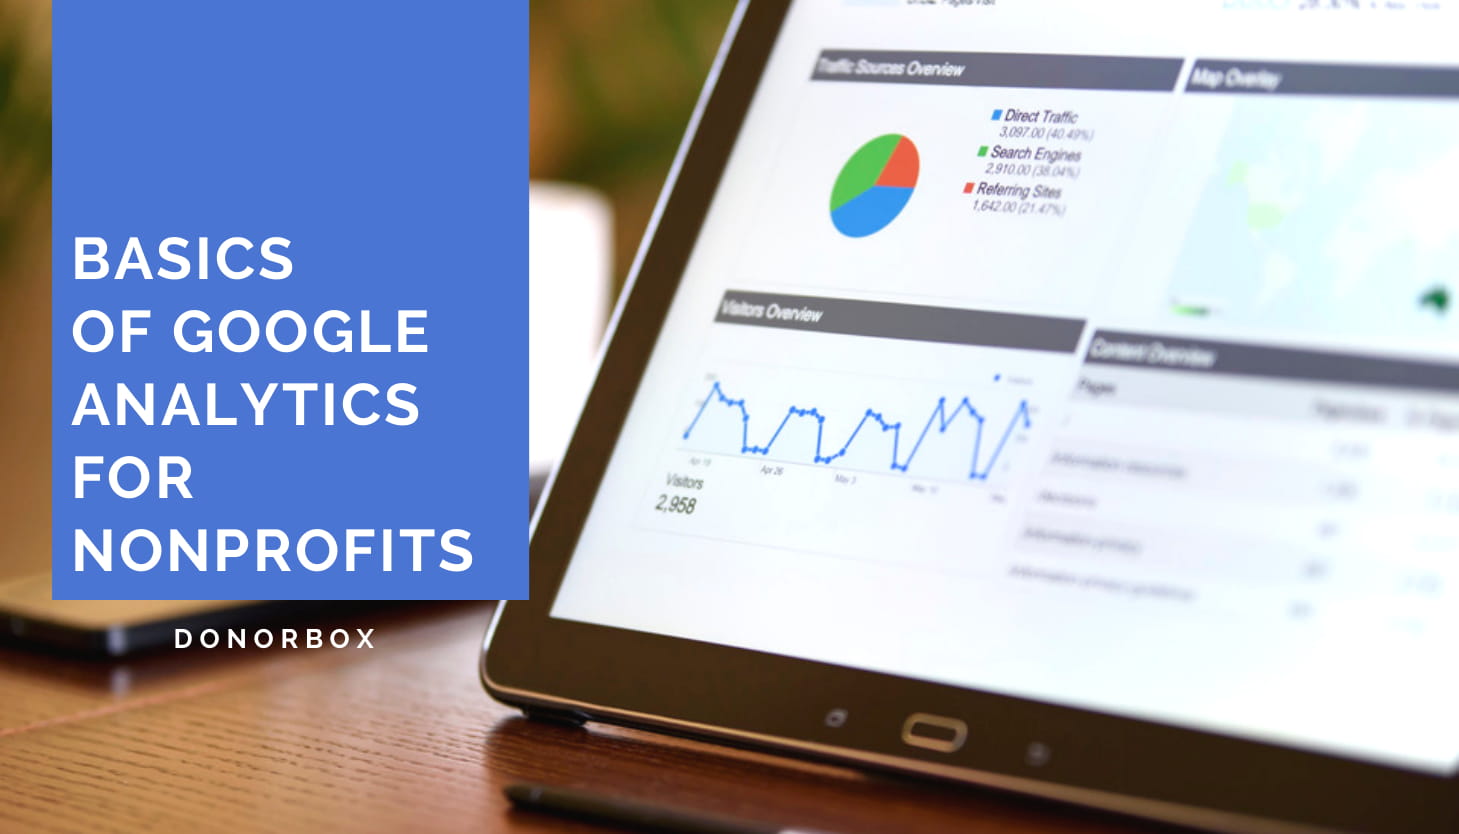 The Basics of Google Analytics for Nonprofits